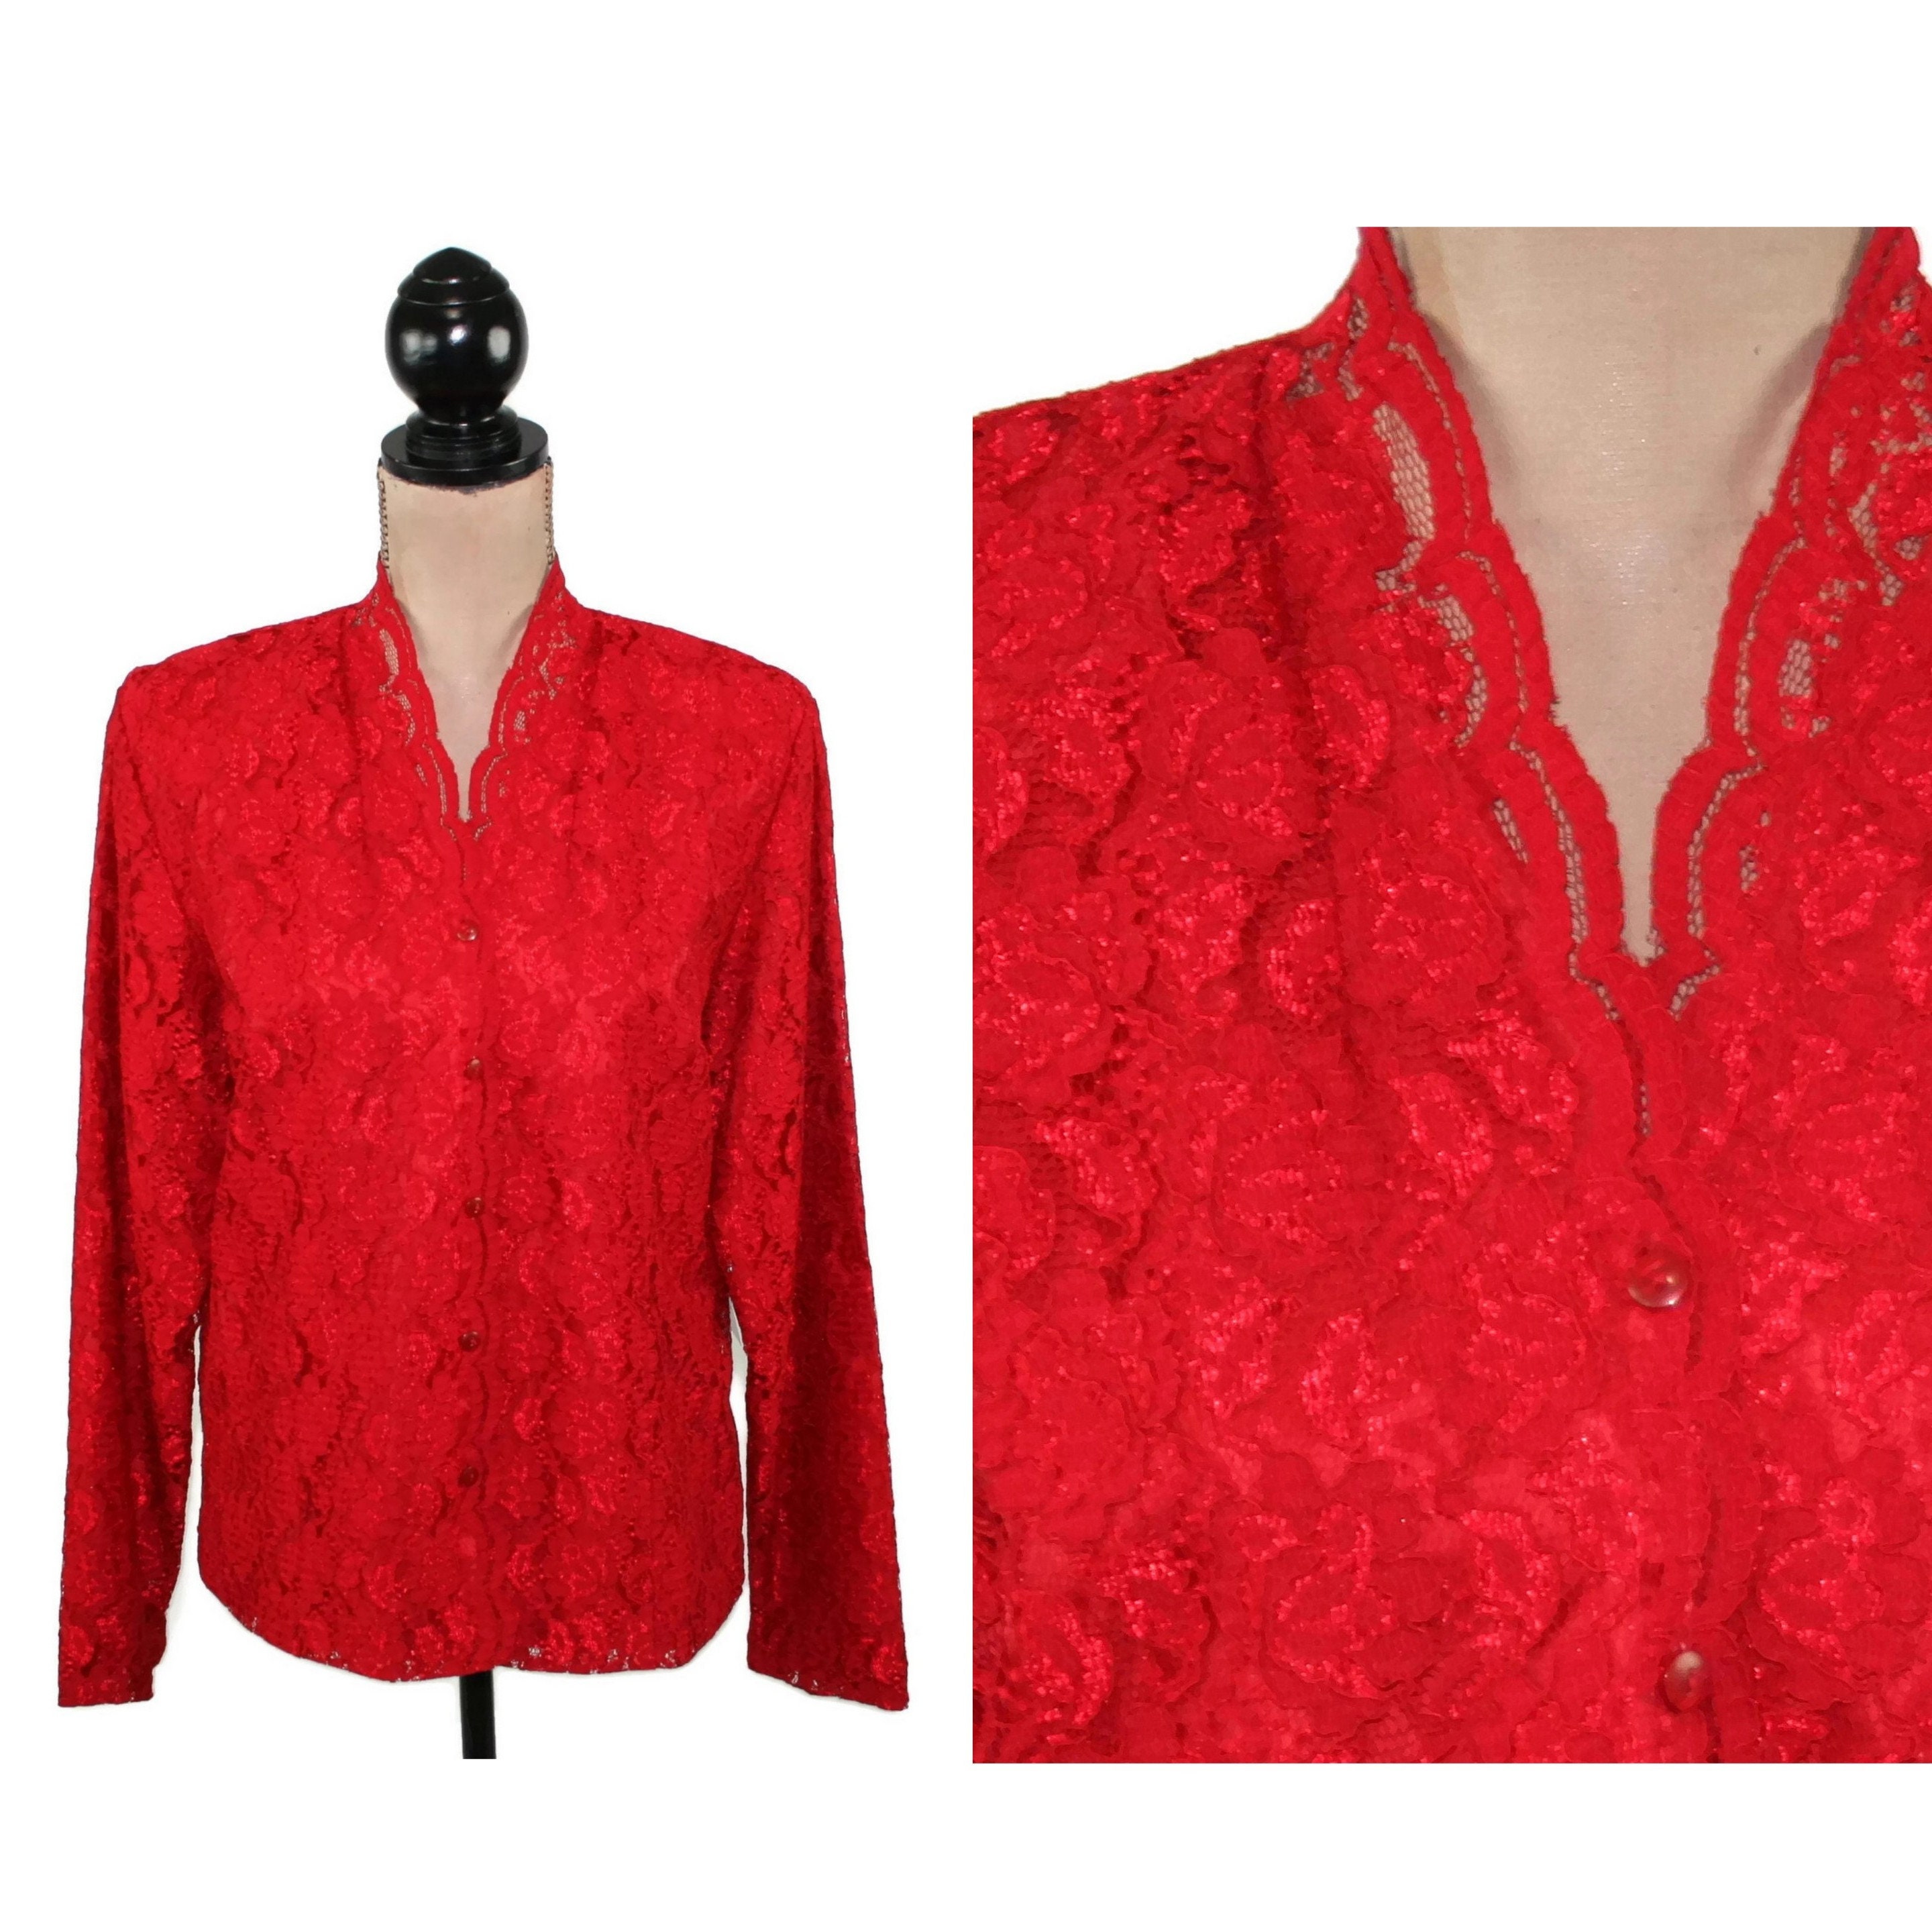 Sheer Tops for Women, Lace Wrap Top, Long Sleeve Shirt, Red Pajama Set 